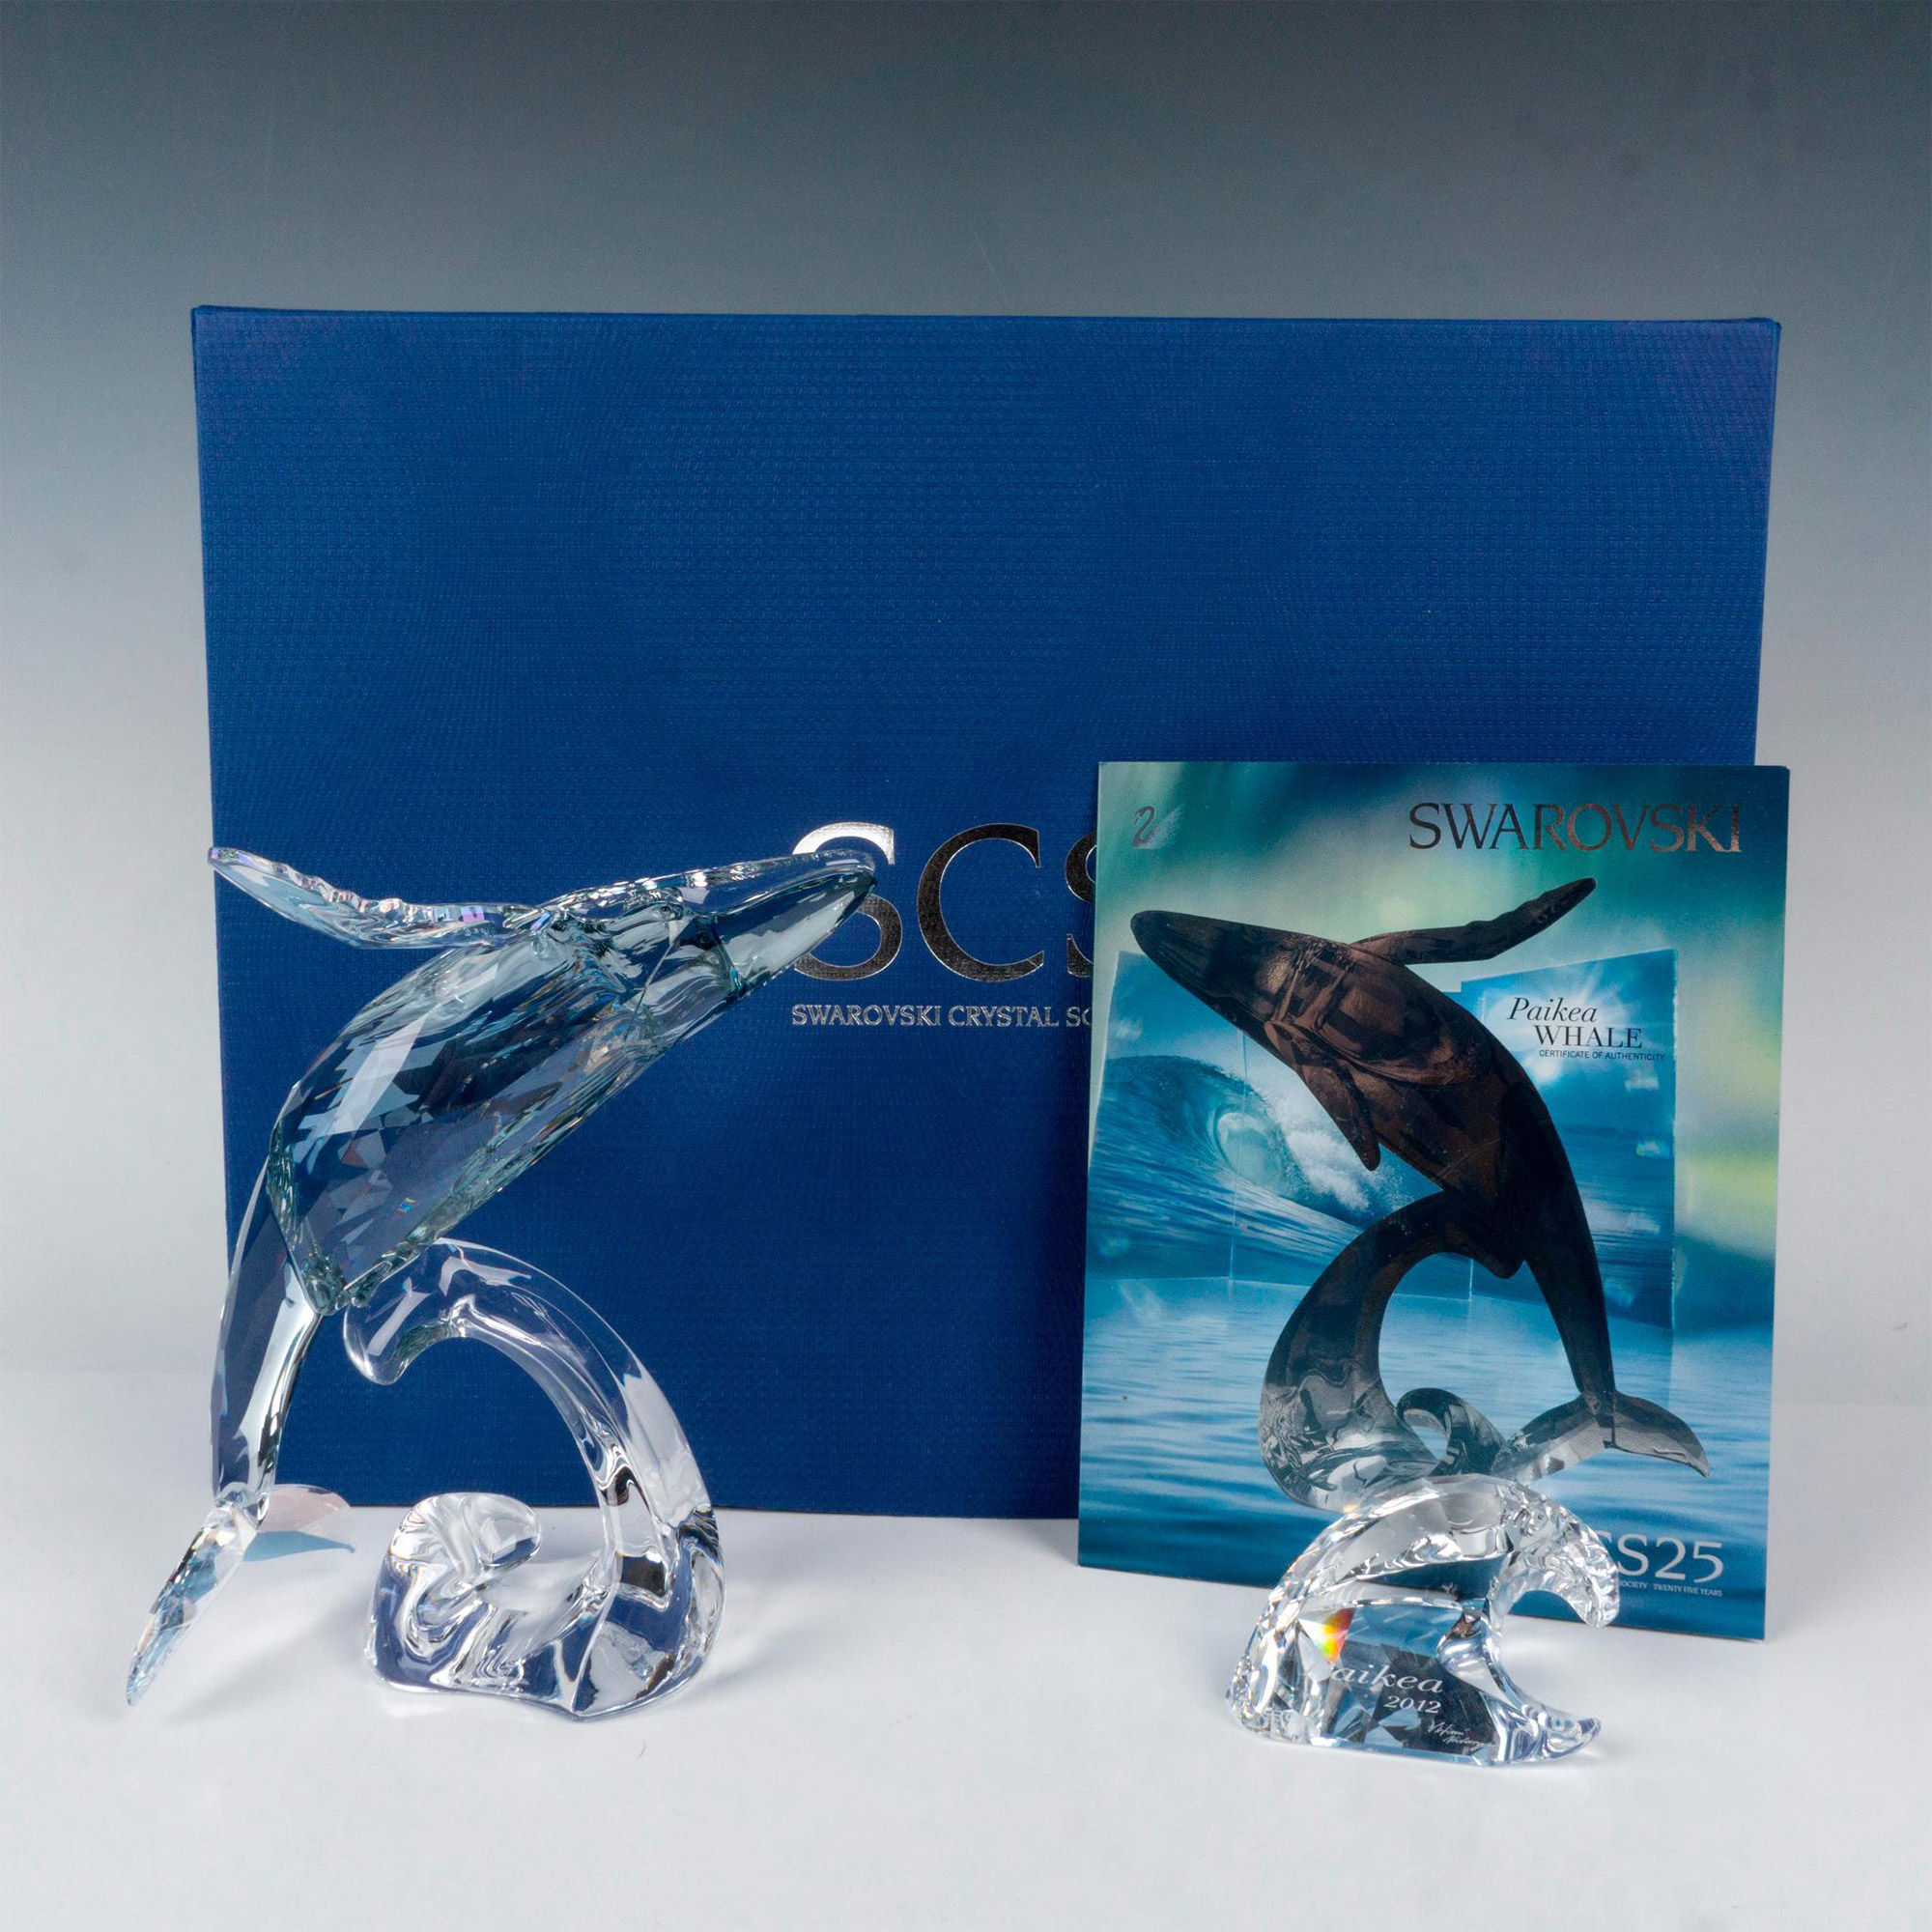 2pc Swarovski Crystal Figurine, Paikea Whale & Plaque - Image 4 of 4